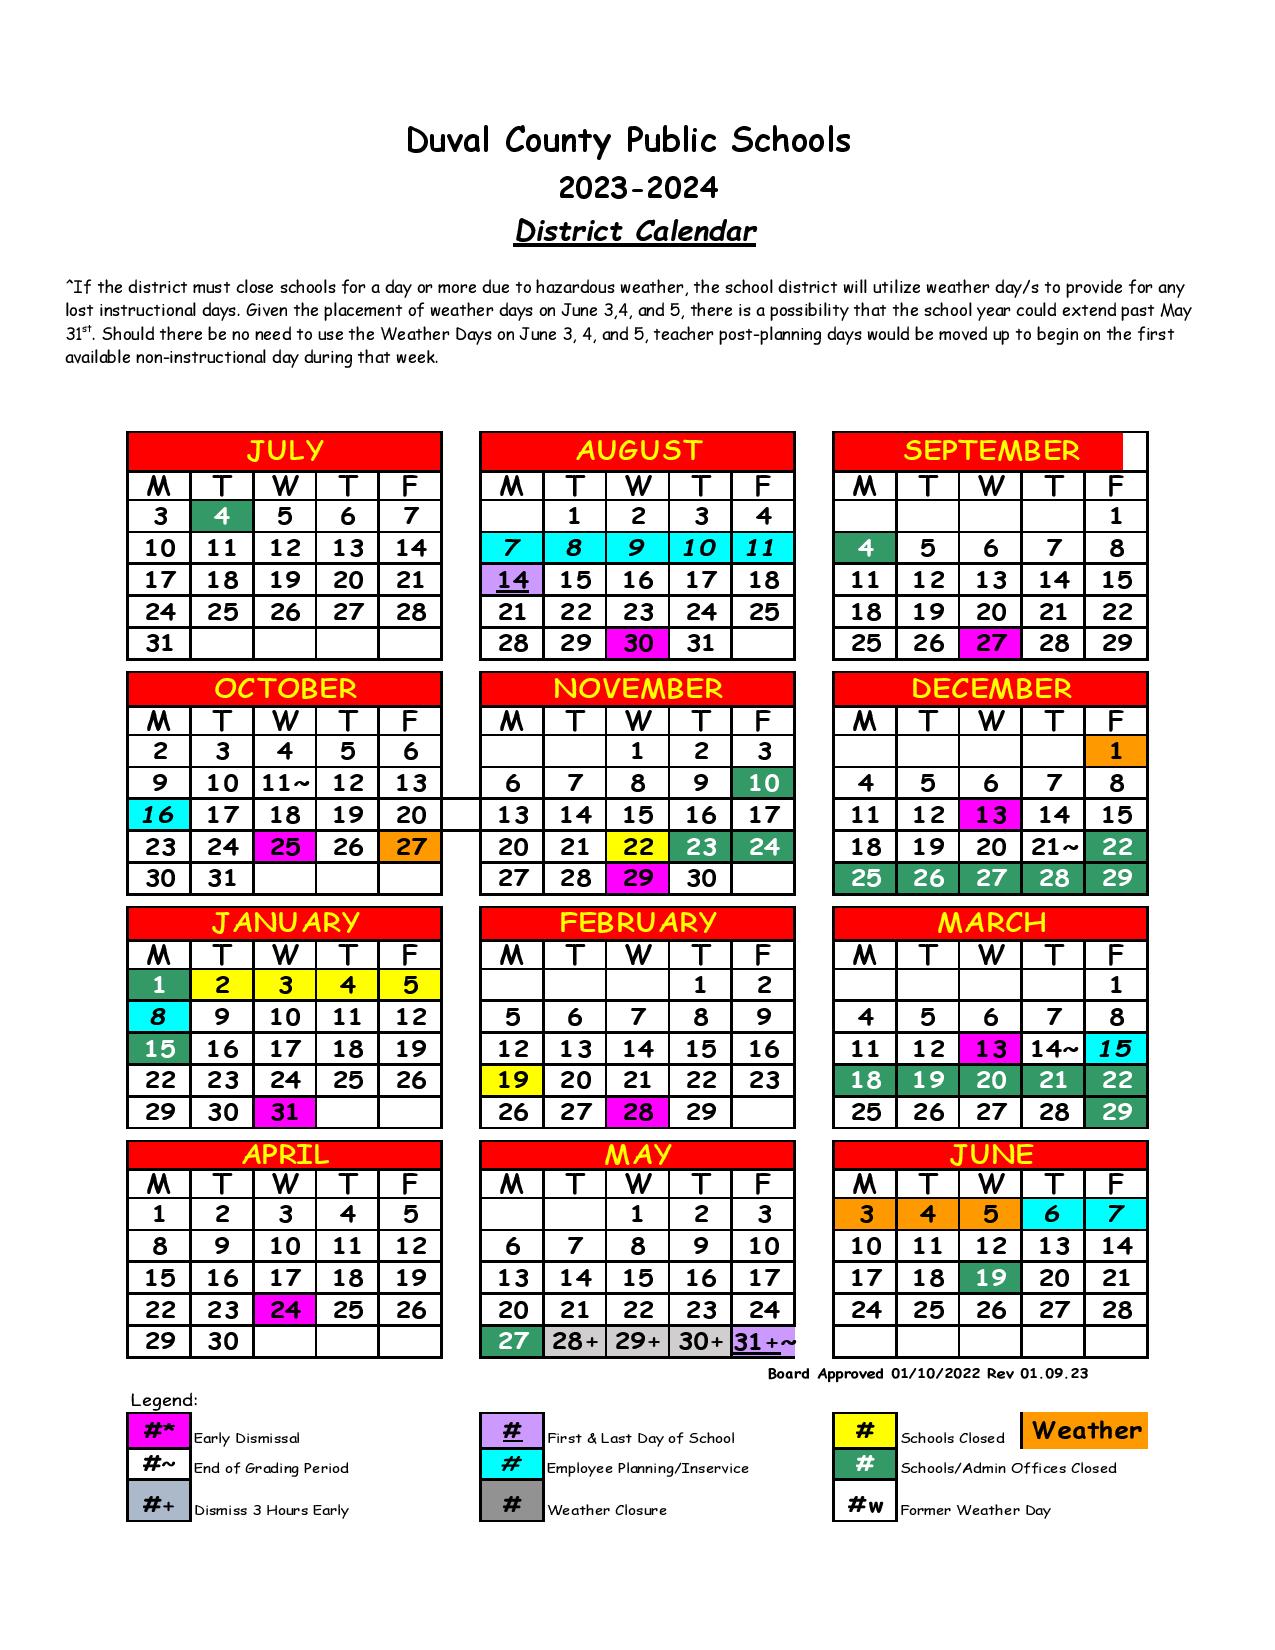 Duval County Public Schools Calendar 2023-2024 (Holiday Breaks)